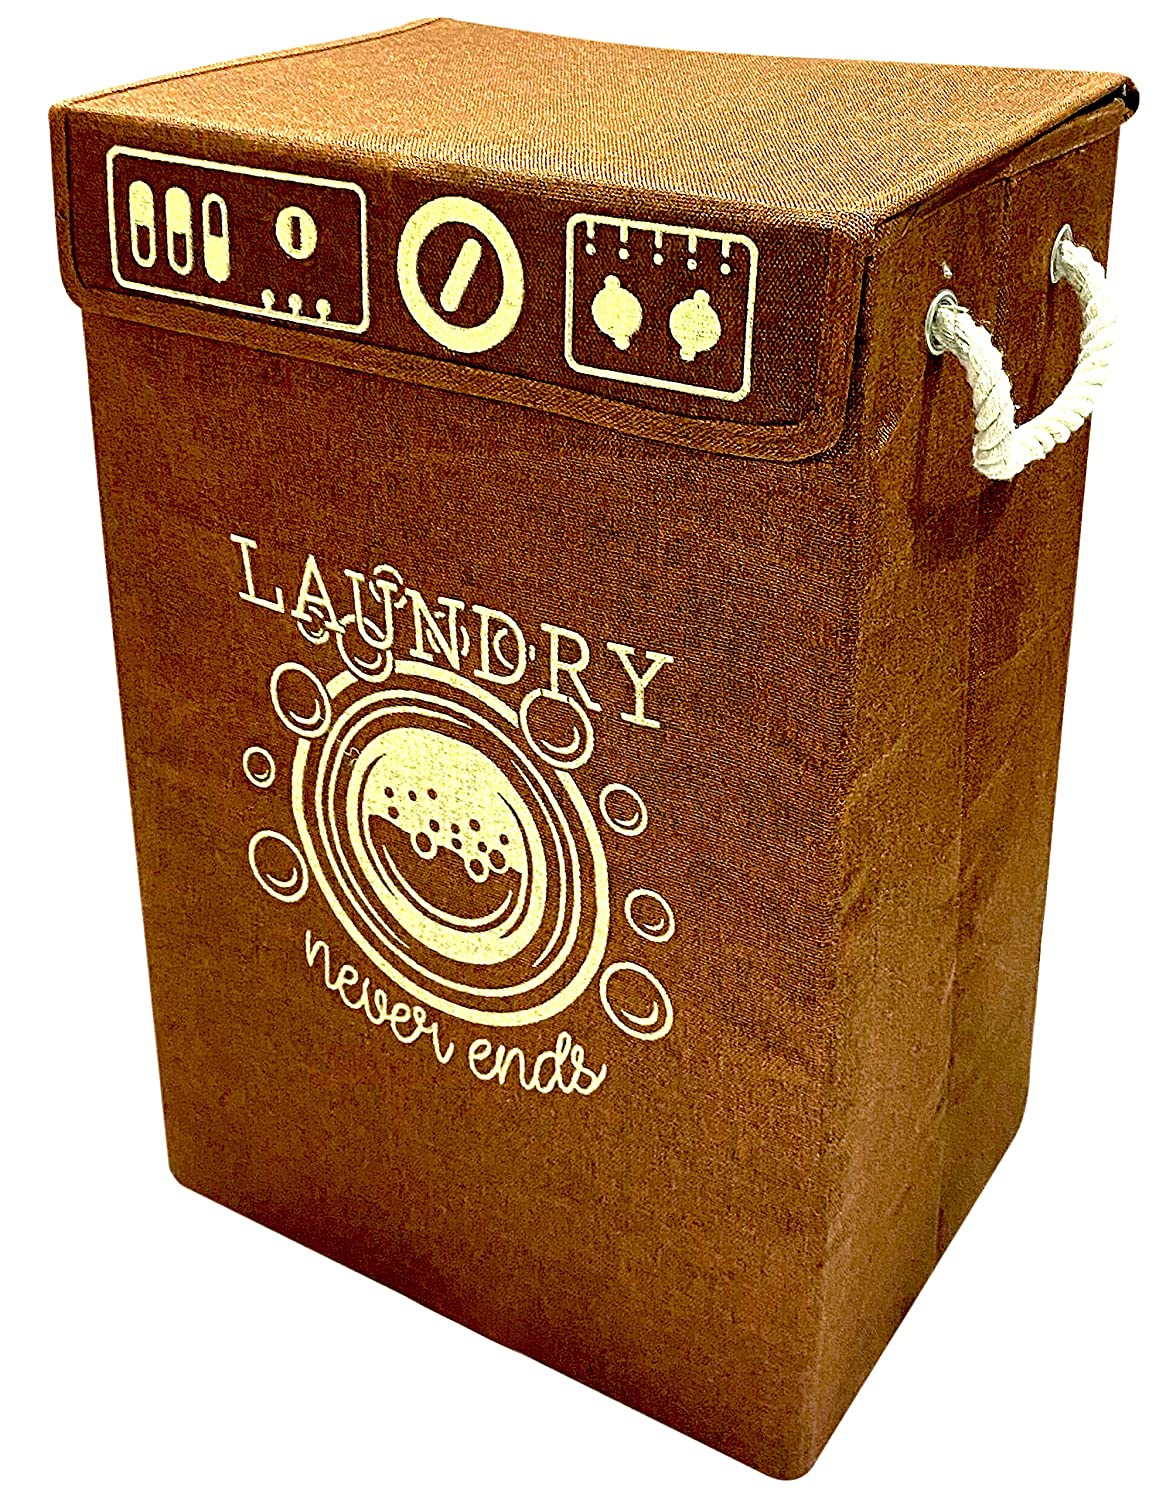 Rust-color-cloth-organizer-foldable-laundry-basket-with-lid-basket-bag-hard-cardboard-72-litres-capacity